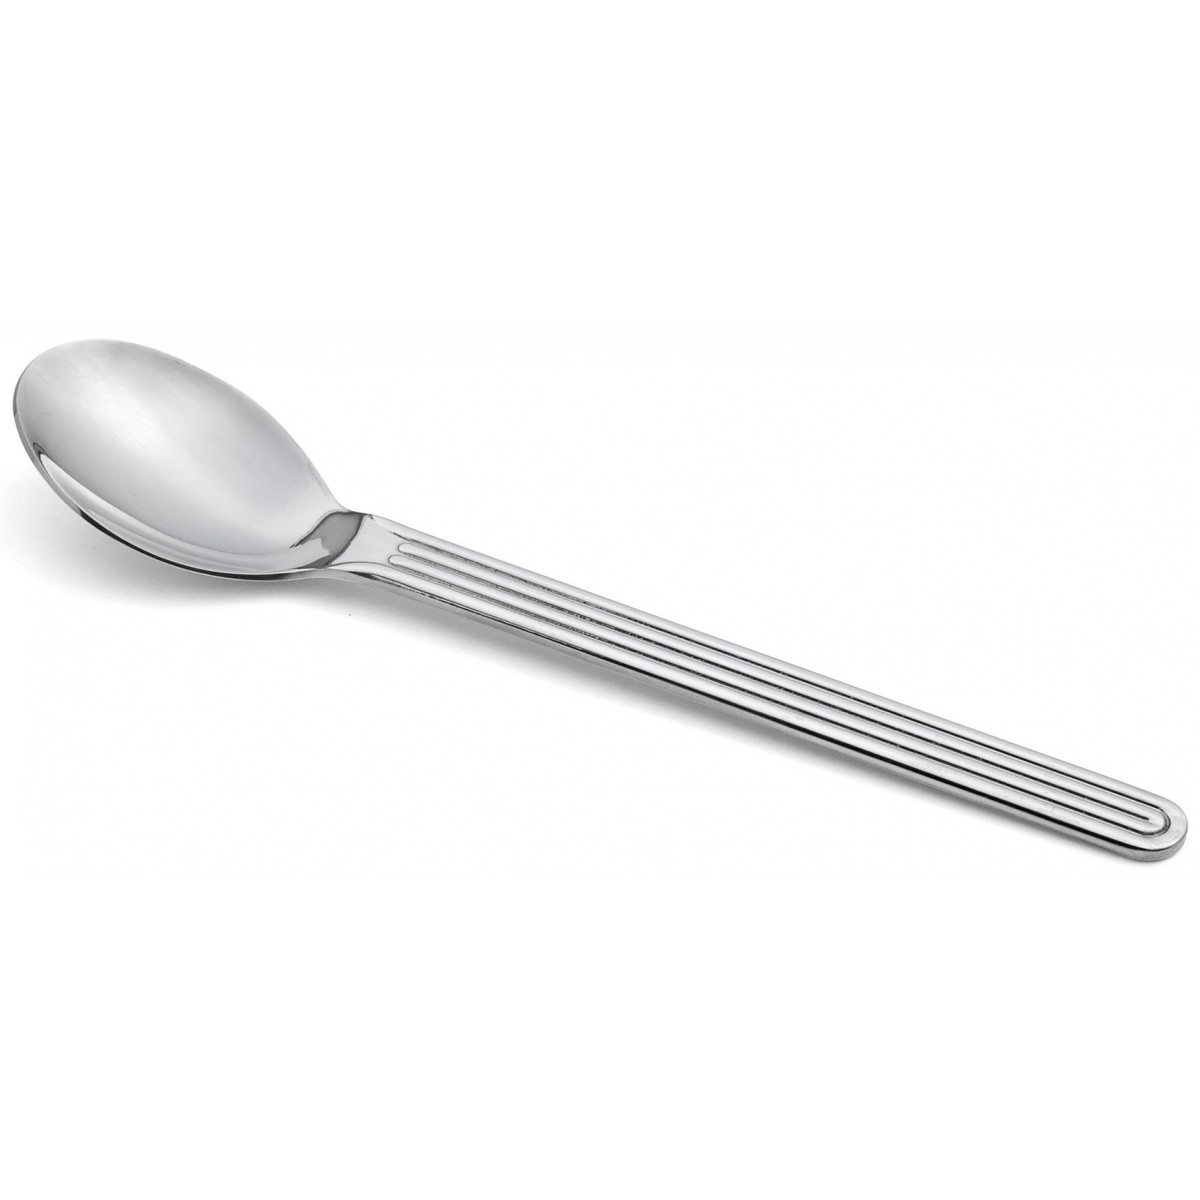 5 x spoon - Sunday